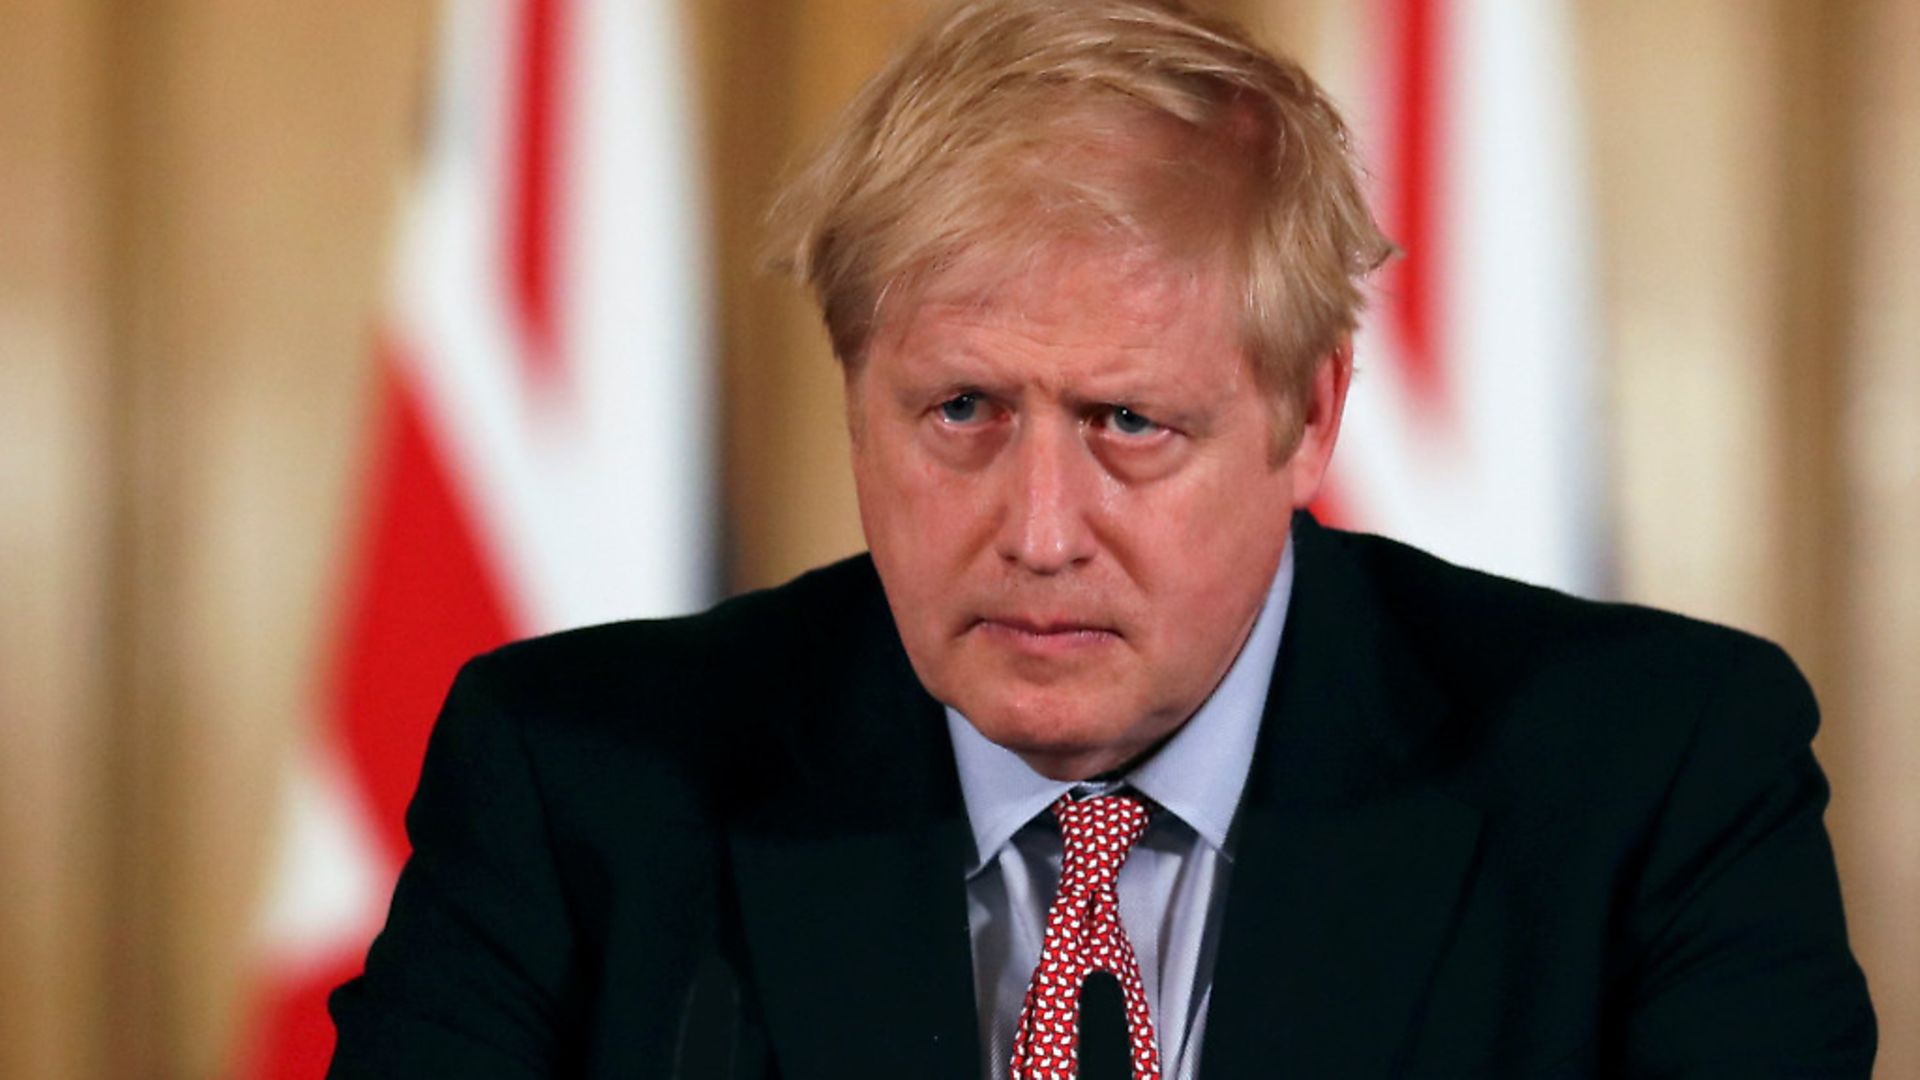 Boris Johnson at a news conference inside 10 Downing Street. Photograph: Simon Dawson/PA. - Credit: PA